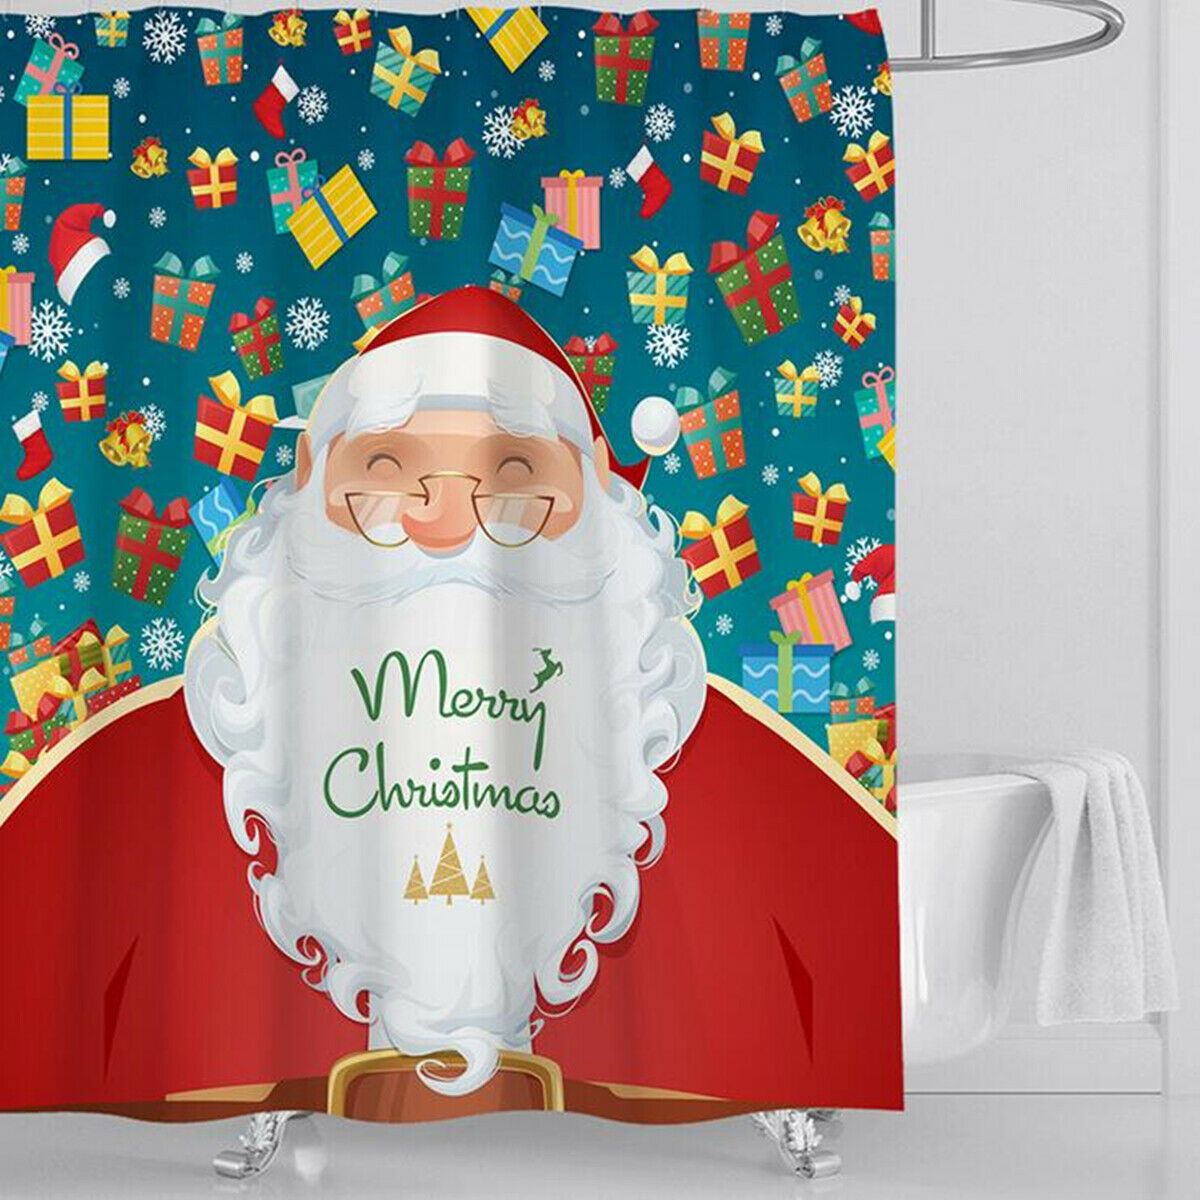 180x150cm Polyester Christmas Shower Curtain Waterproof Bathroom Home   CA3